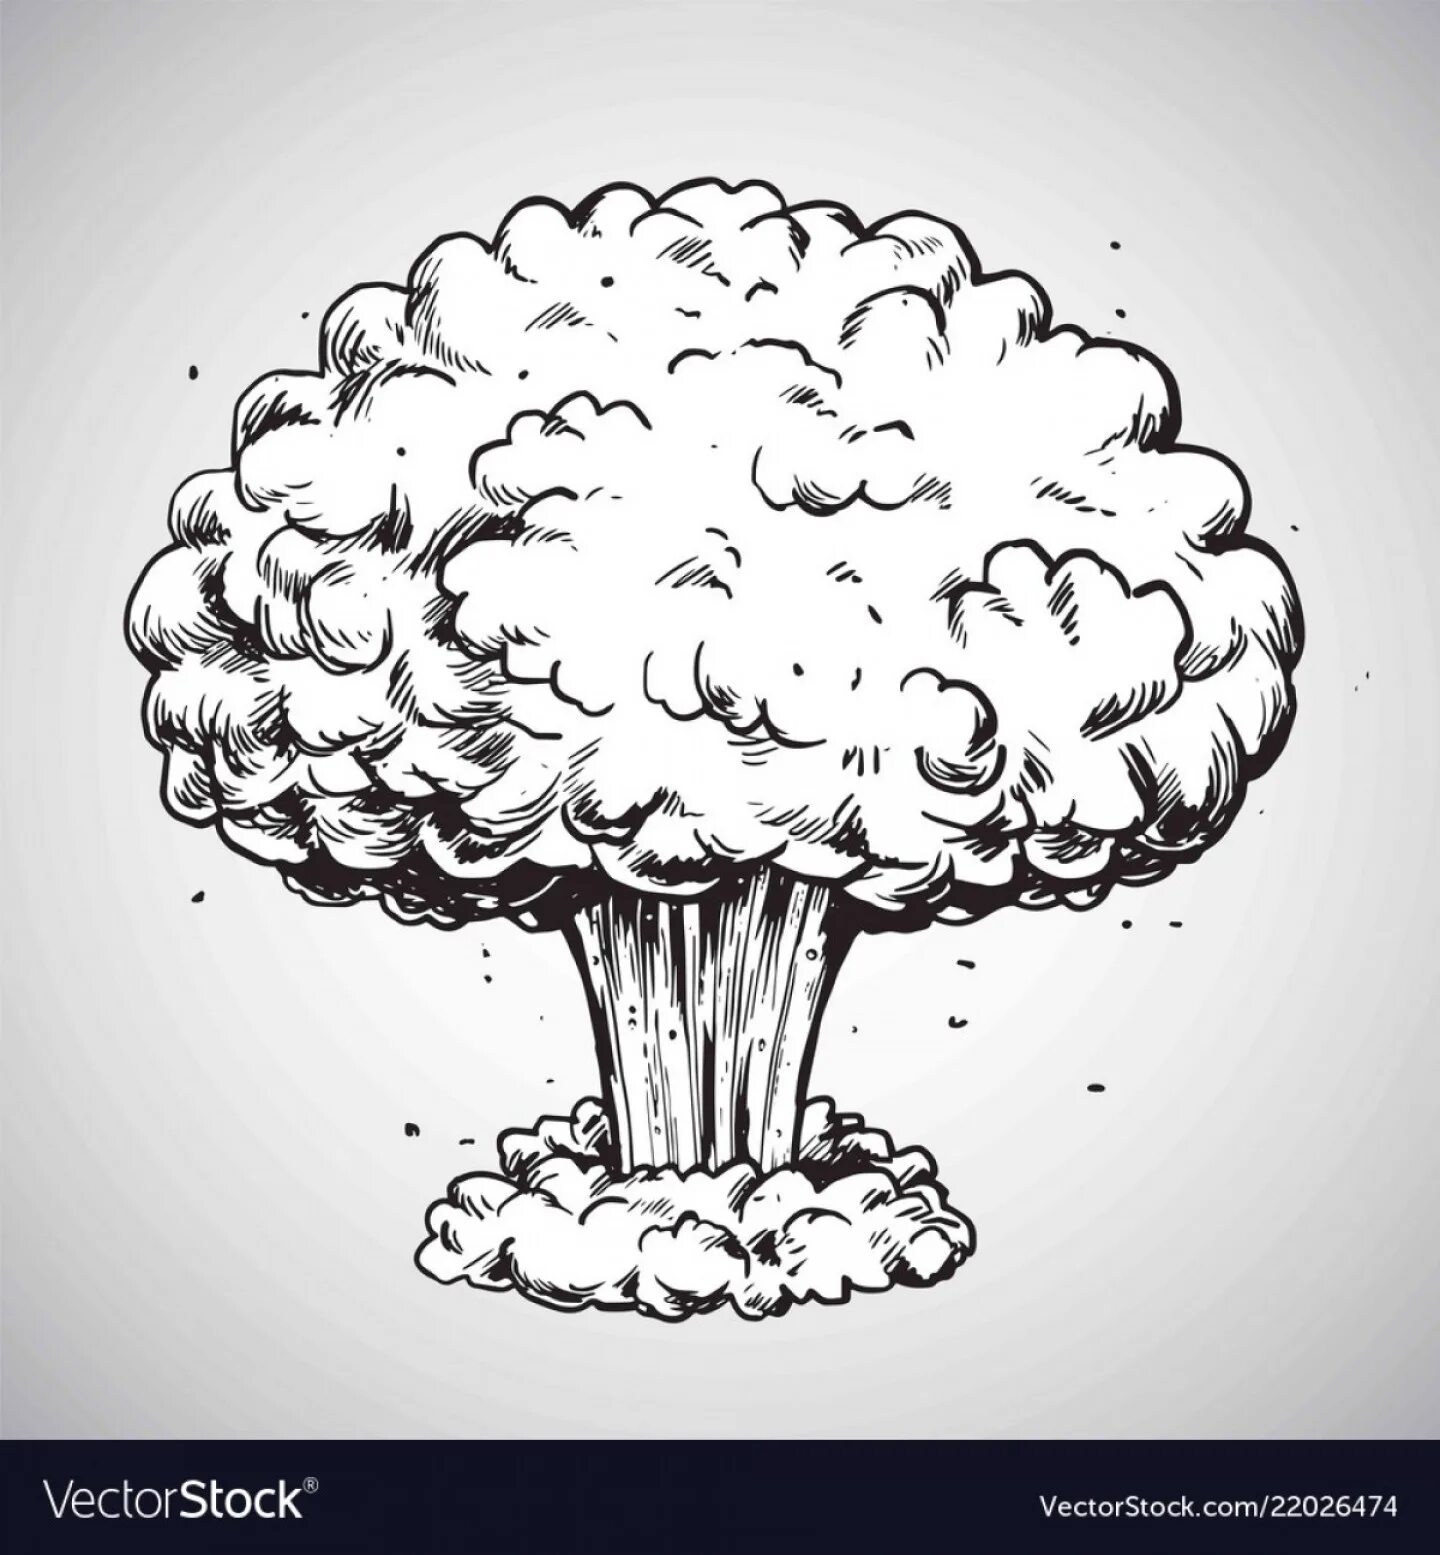 Atomic bomb #20